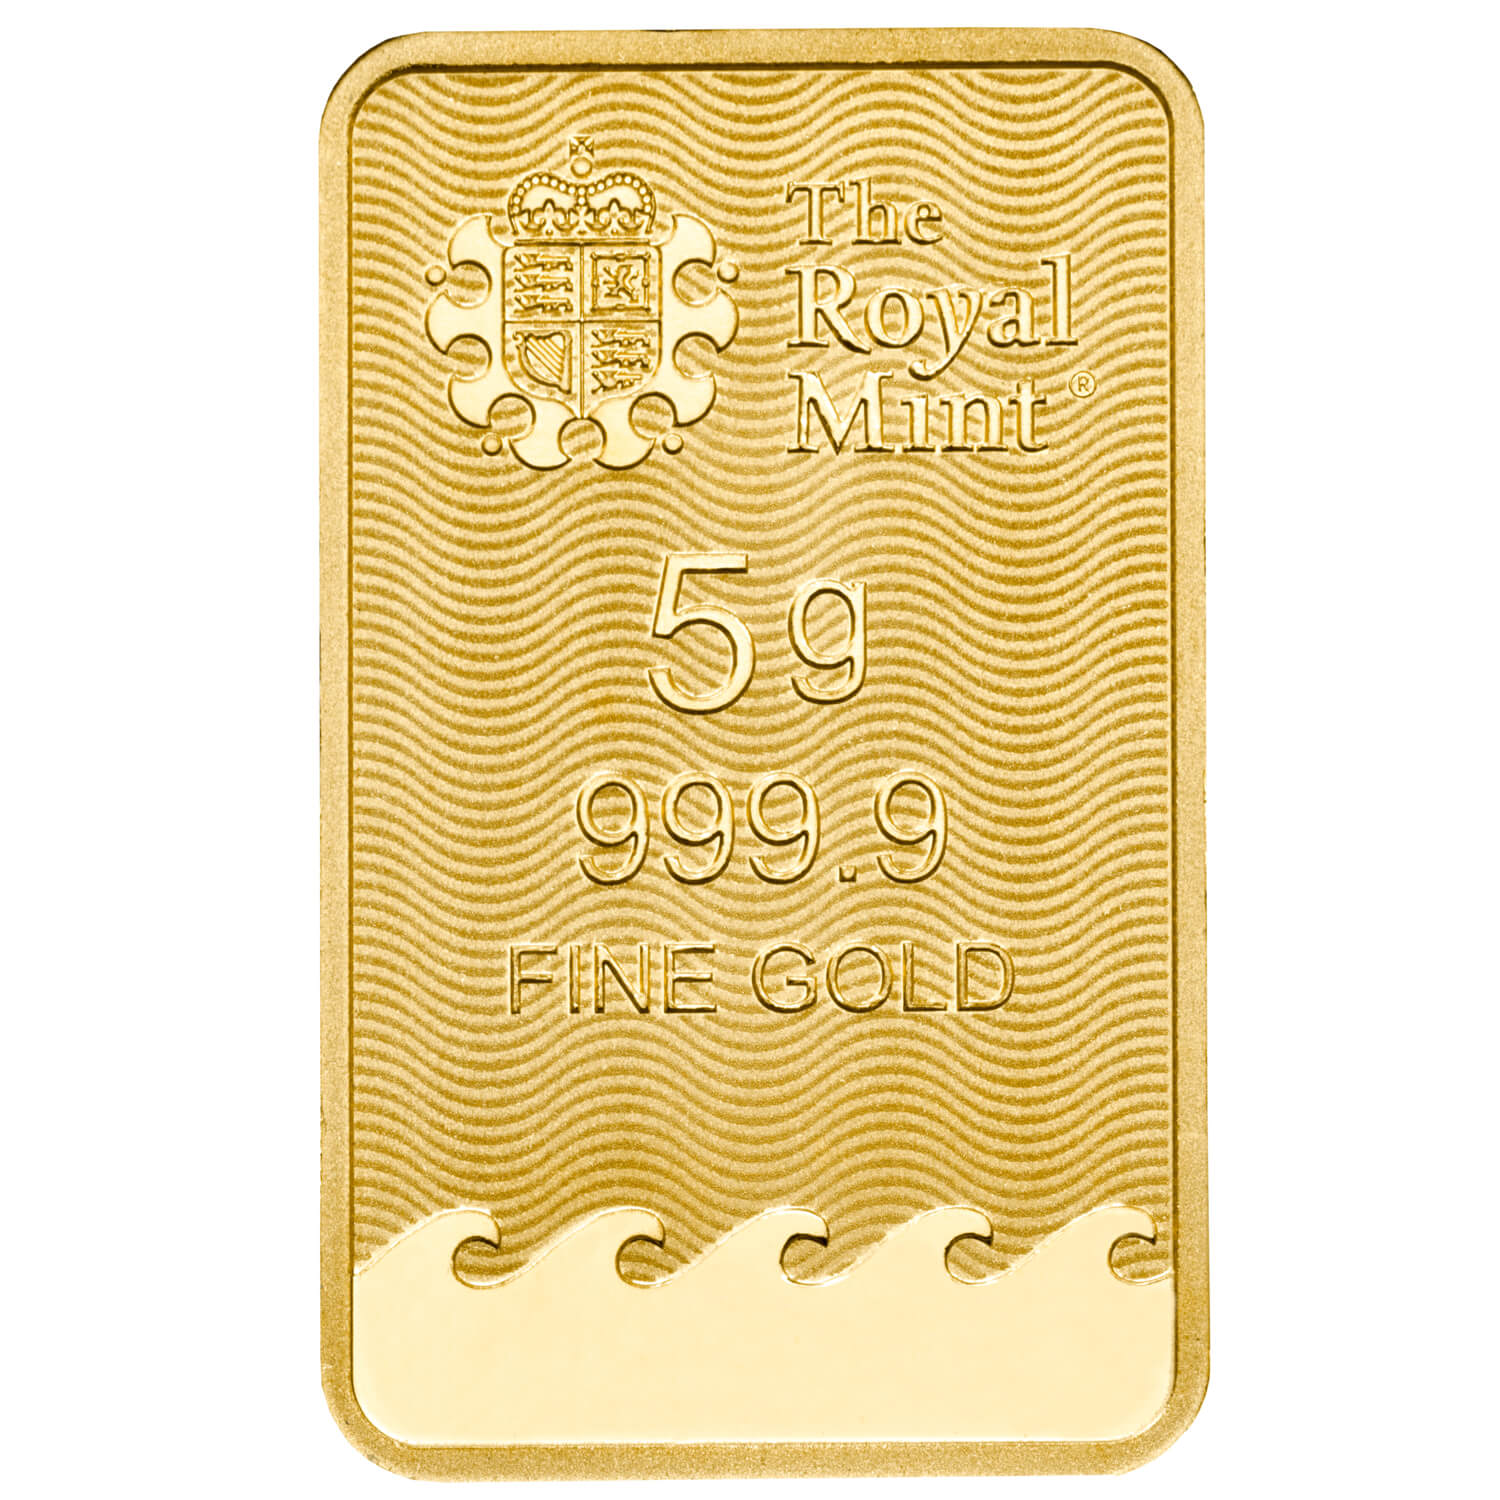 https://www.royalmint.com/globalassets/bullion/images/products/britannia/brit-bars/britannia-bar-minted-gold-5g-side-2---rmr19850-1500x1500-f3a2c67.jpg